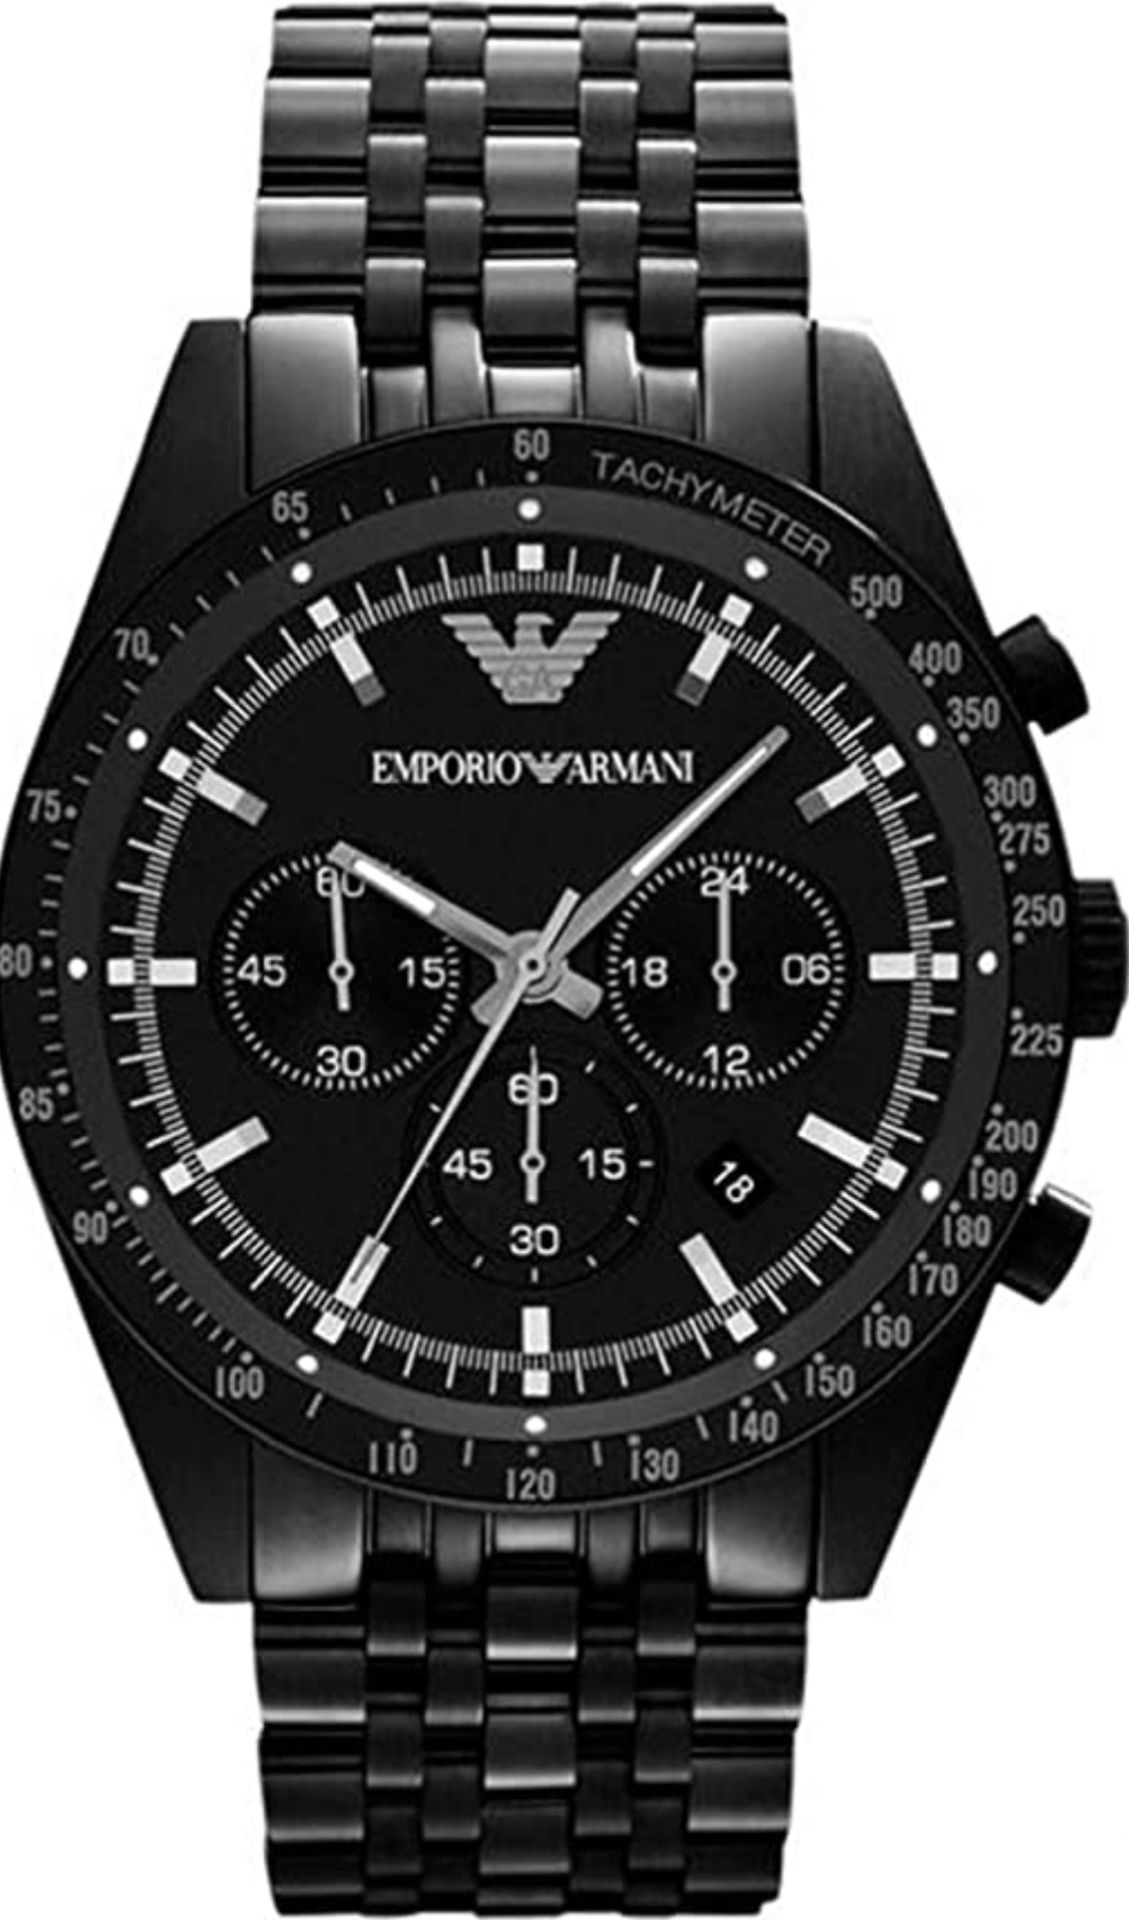 Emporio Armani AR5989 Men's Tazio Black Stainless Steel Bracelet Chronograph Watch - Image 2 of 9